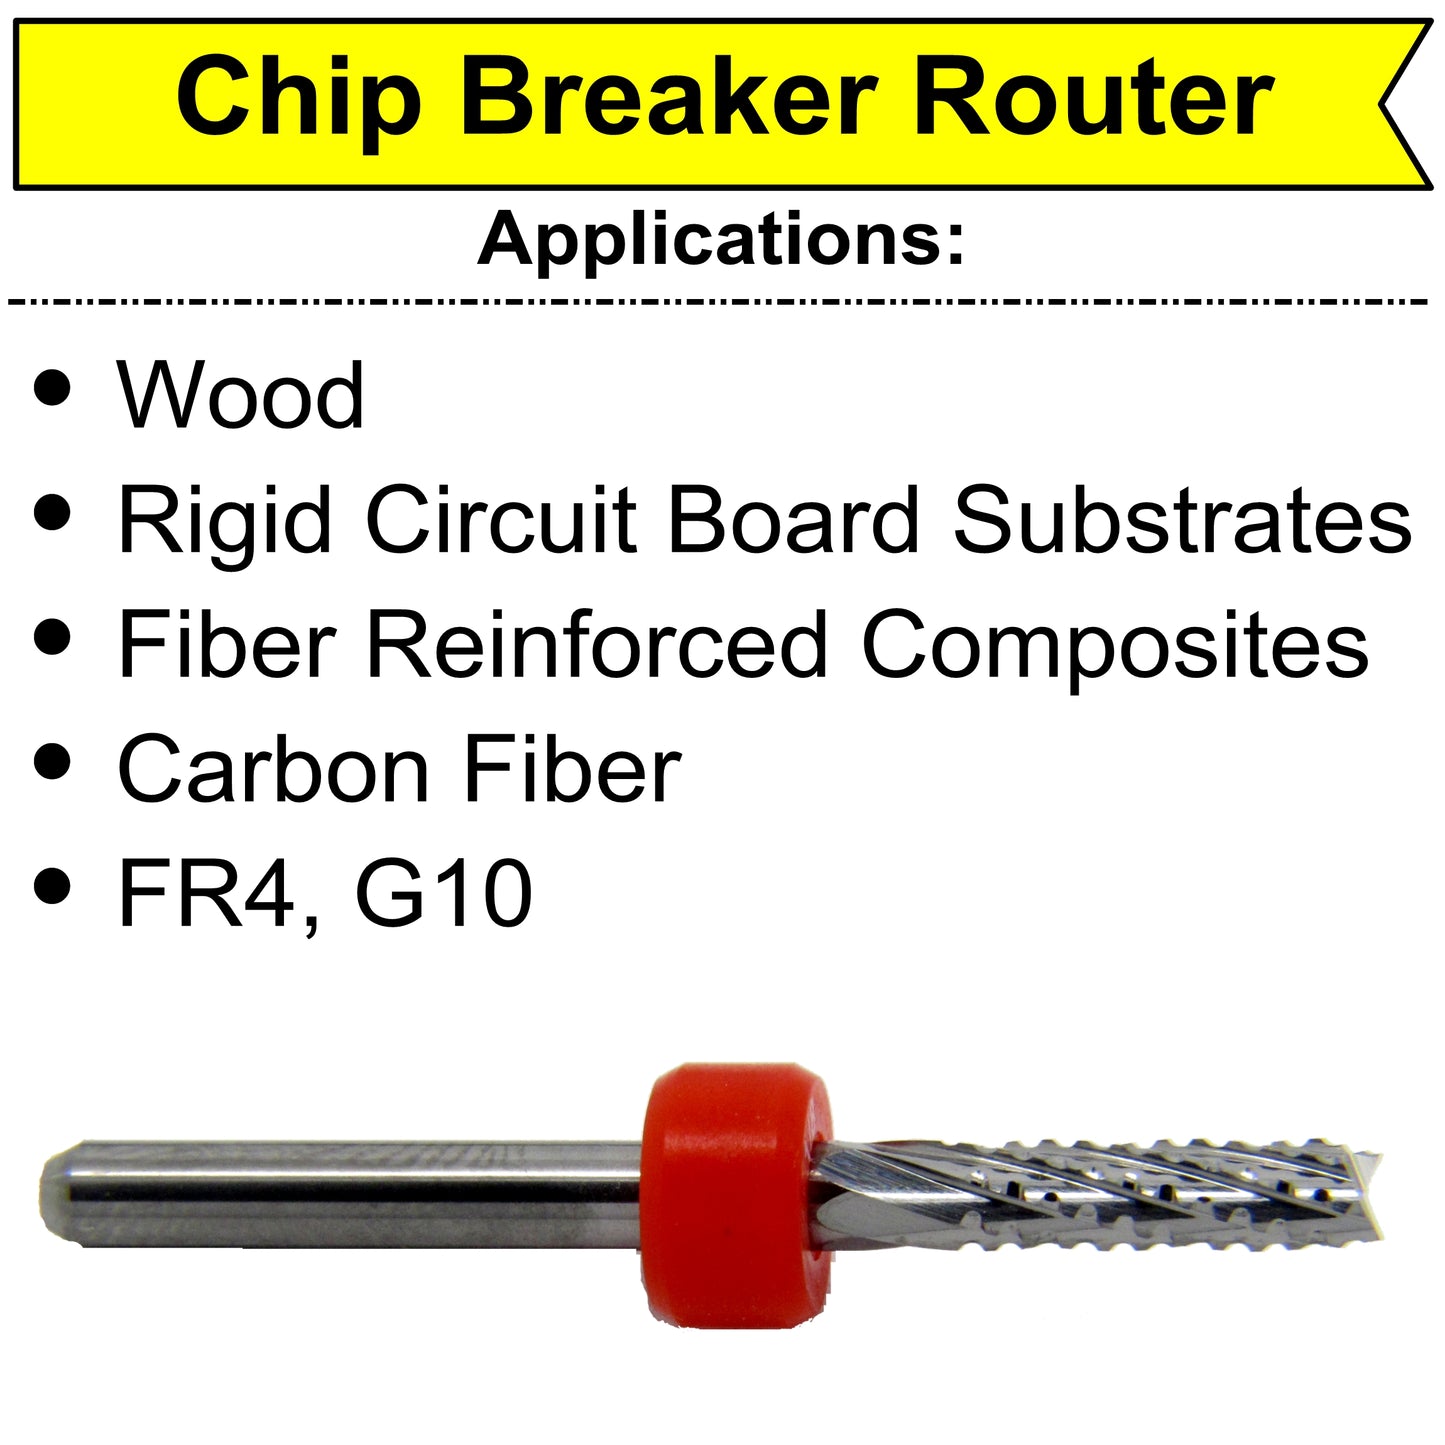 1/8" x .472" LOC Chip Breaker Carbide Router - Fishtail Tip R172